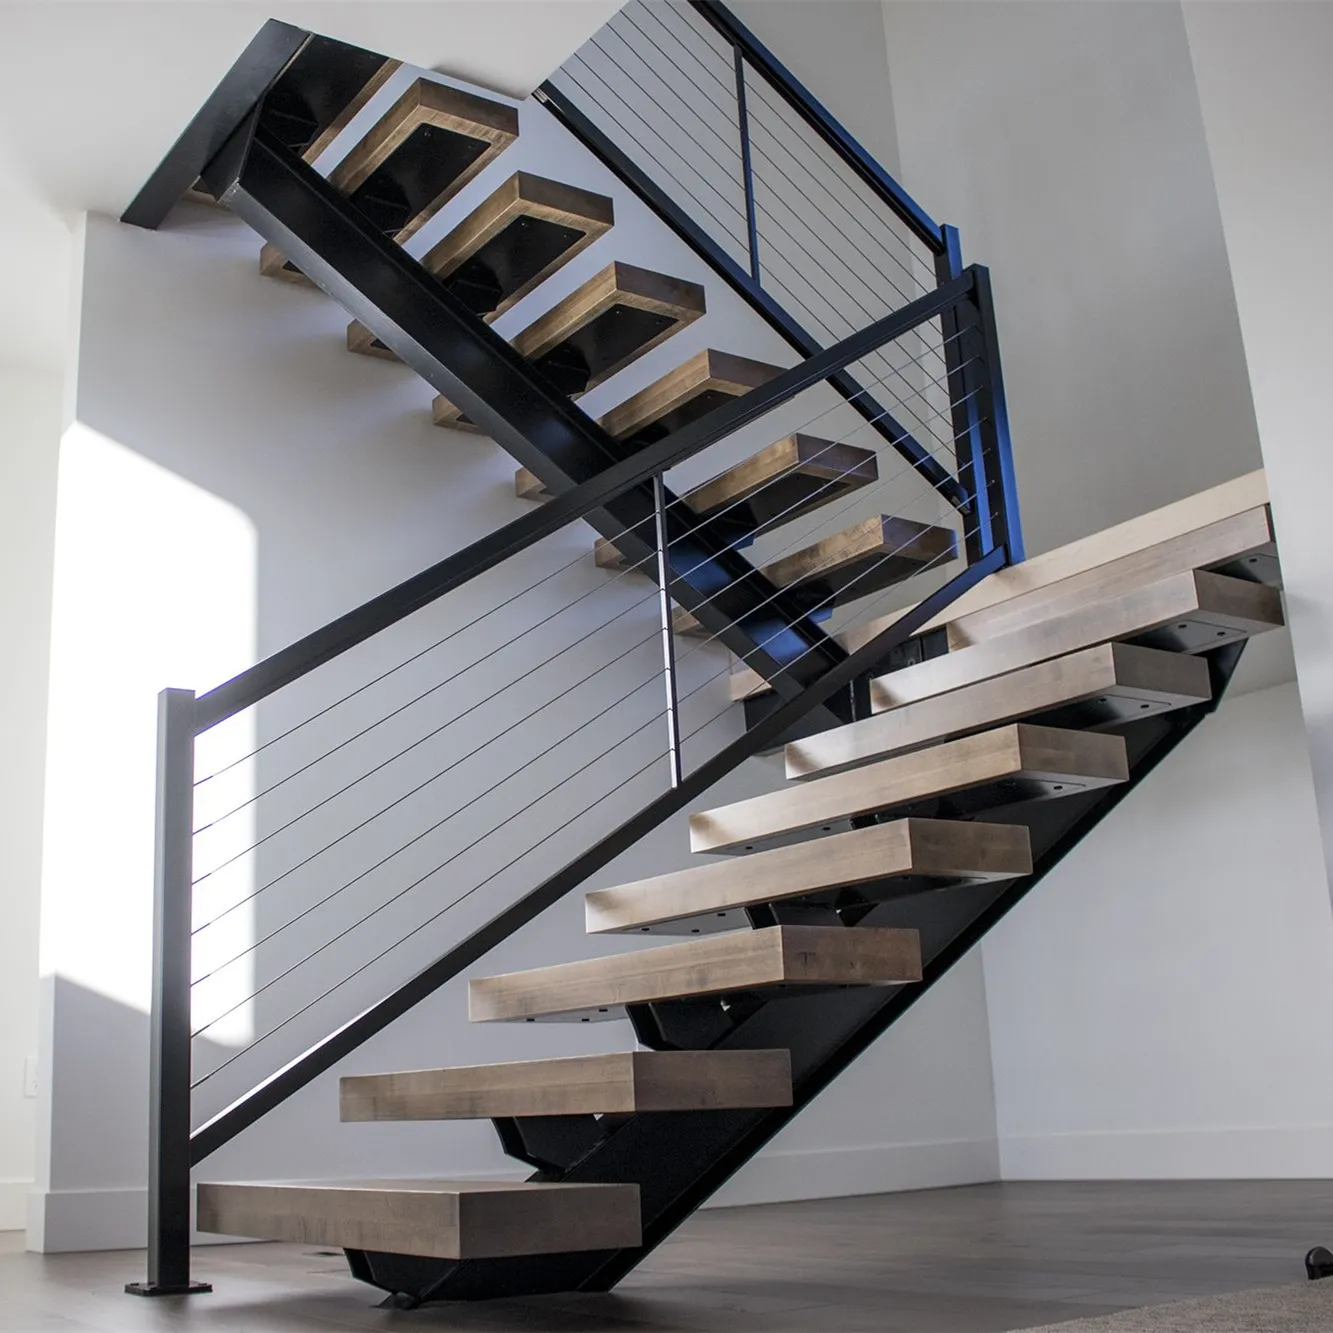 Kapalı modern dubleks ev merdiven ahşap merdiven yüzen merdiven